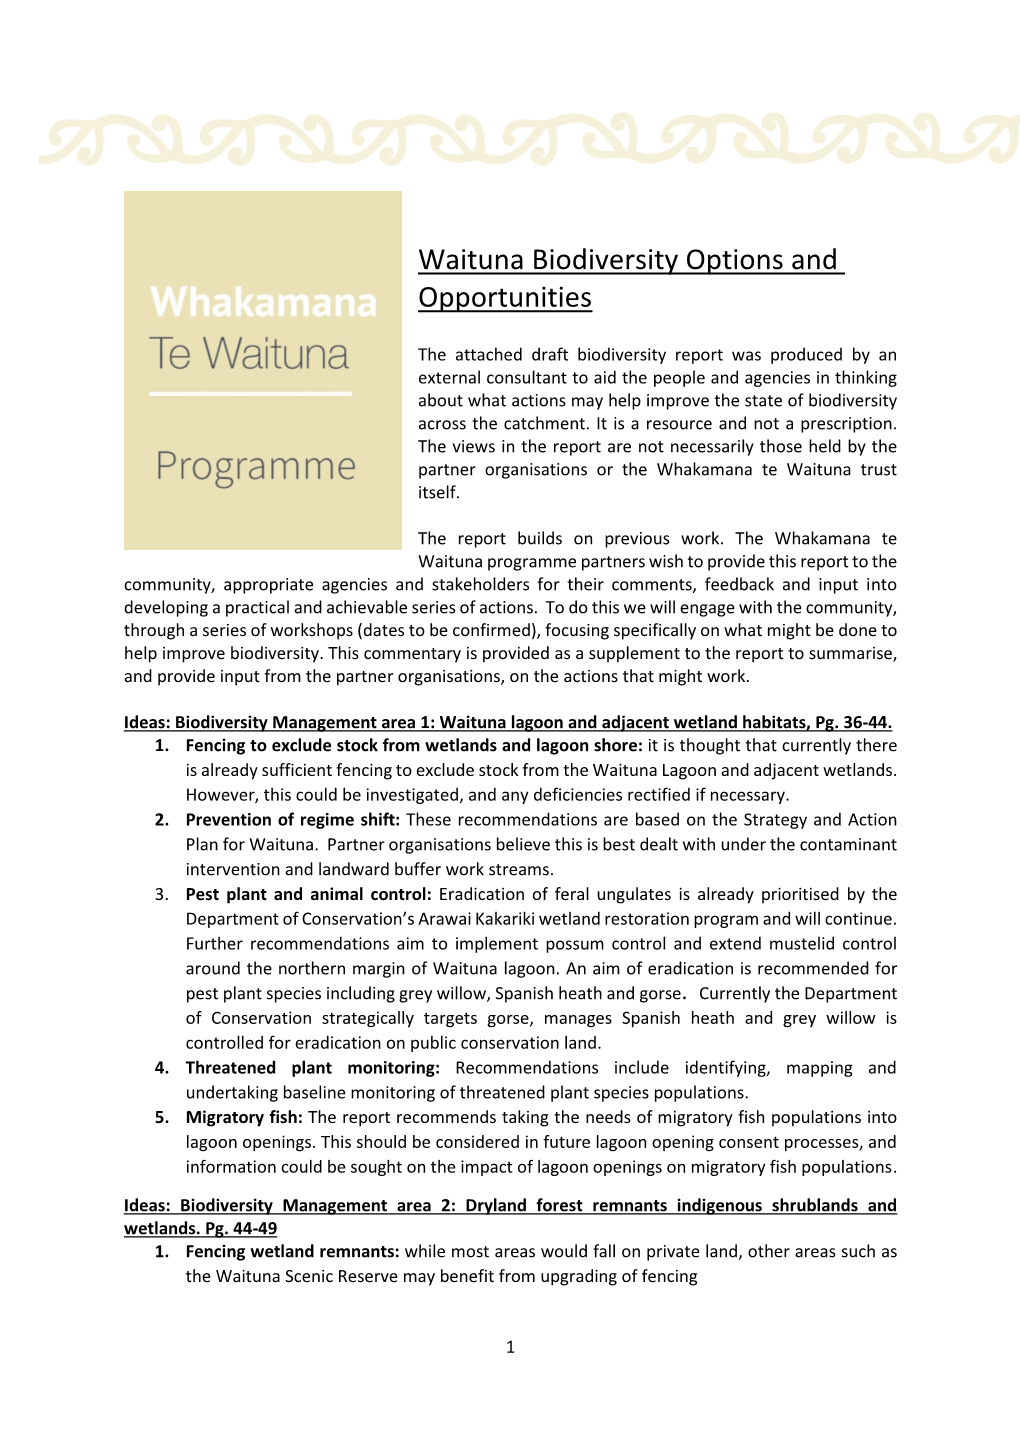 Waituna Biodiversity Options and Opportunities